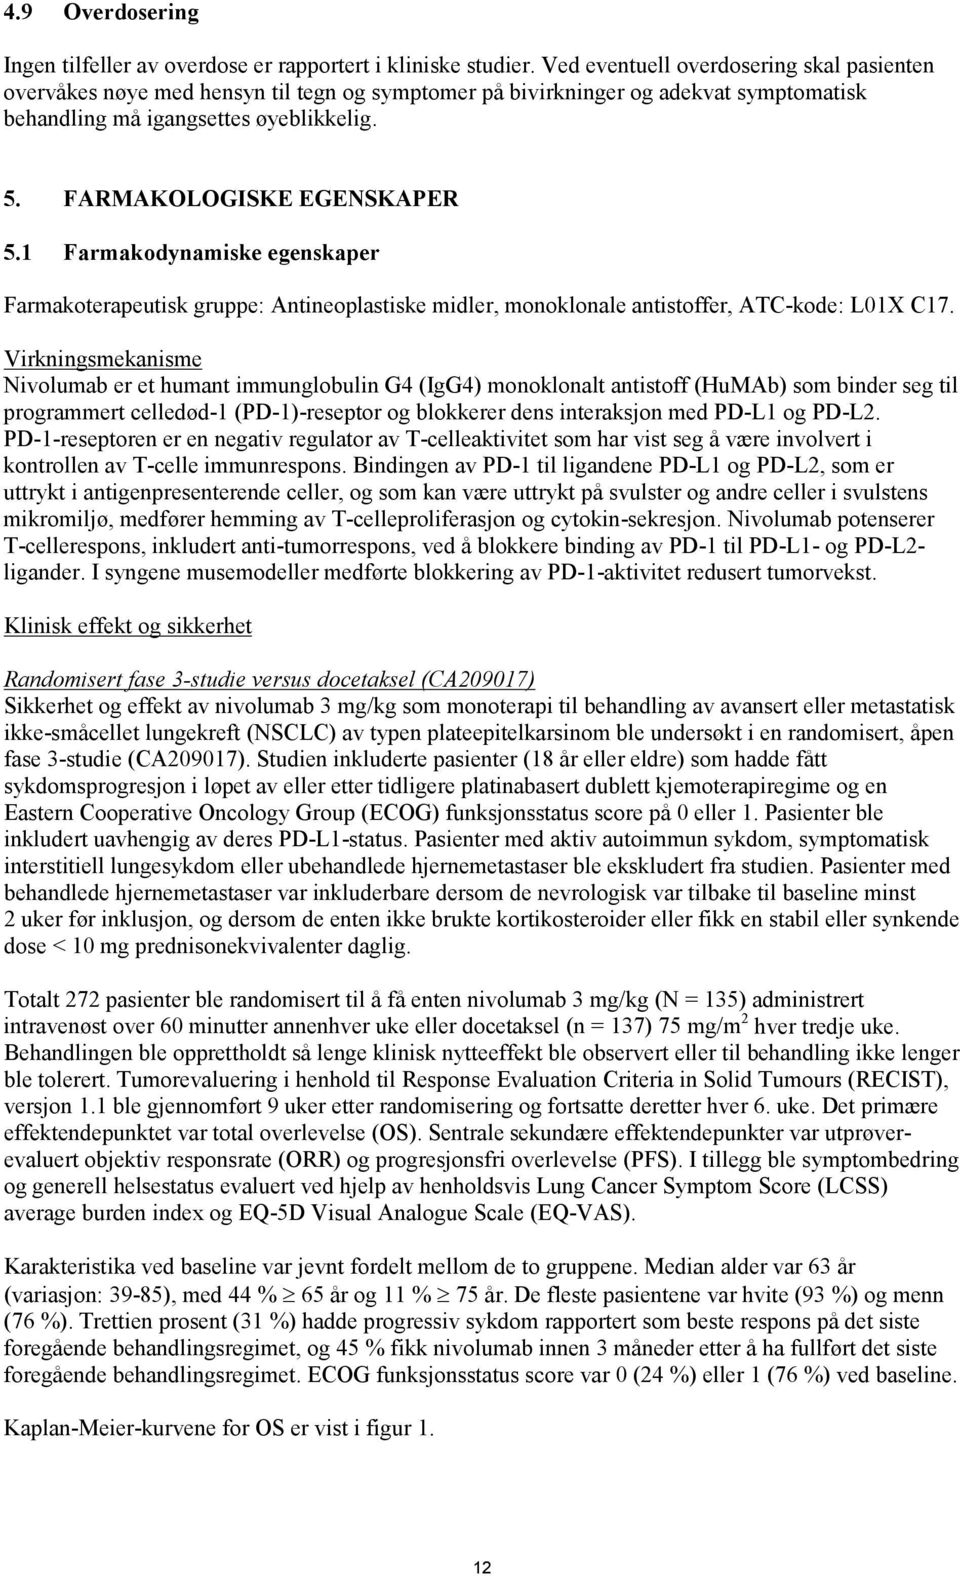 FARMAKOLOGISKE EGENSKAPER 5.1 Farmakodynamiske egenskaper Farmakoterapeutisk gruppe: Antineoplastiske midler, monoklonale antistoffer, ATC-kode: L01X C17.